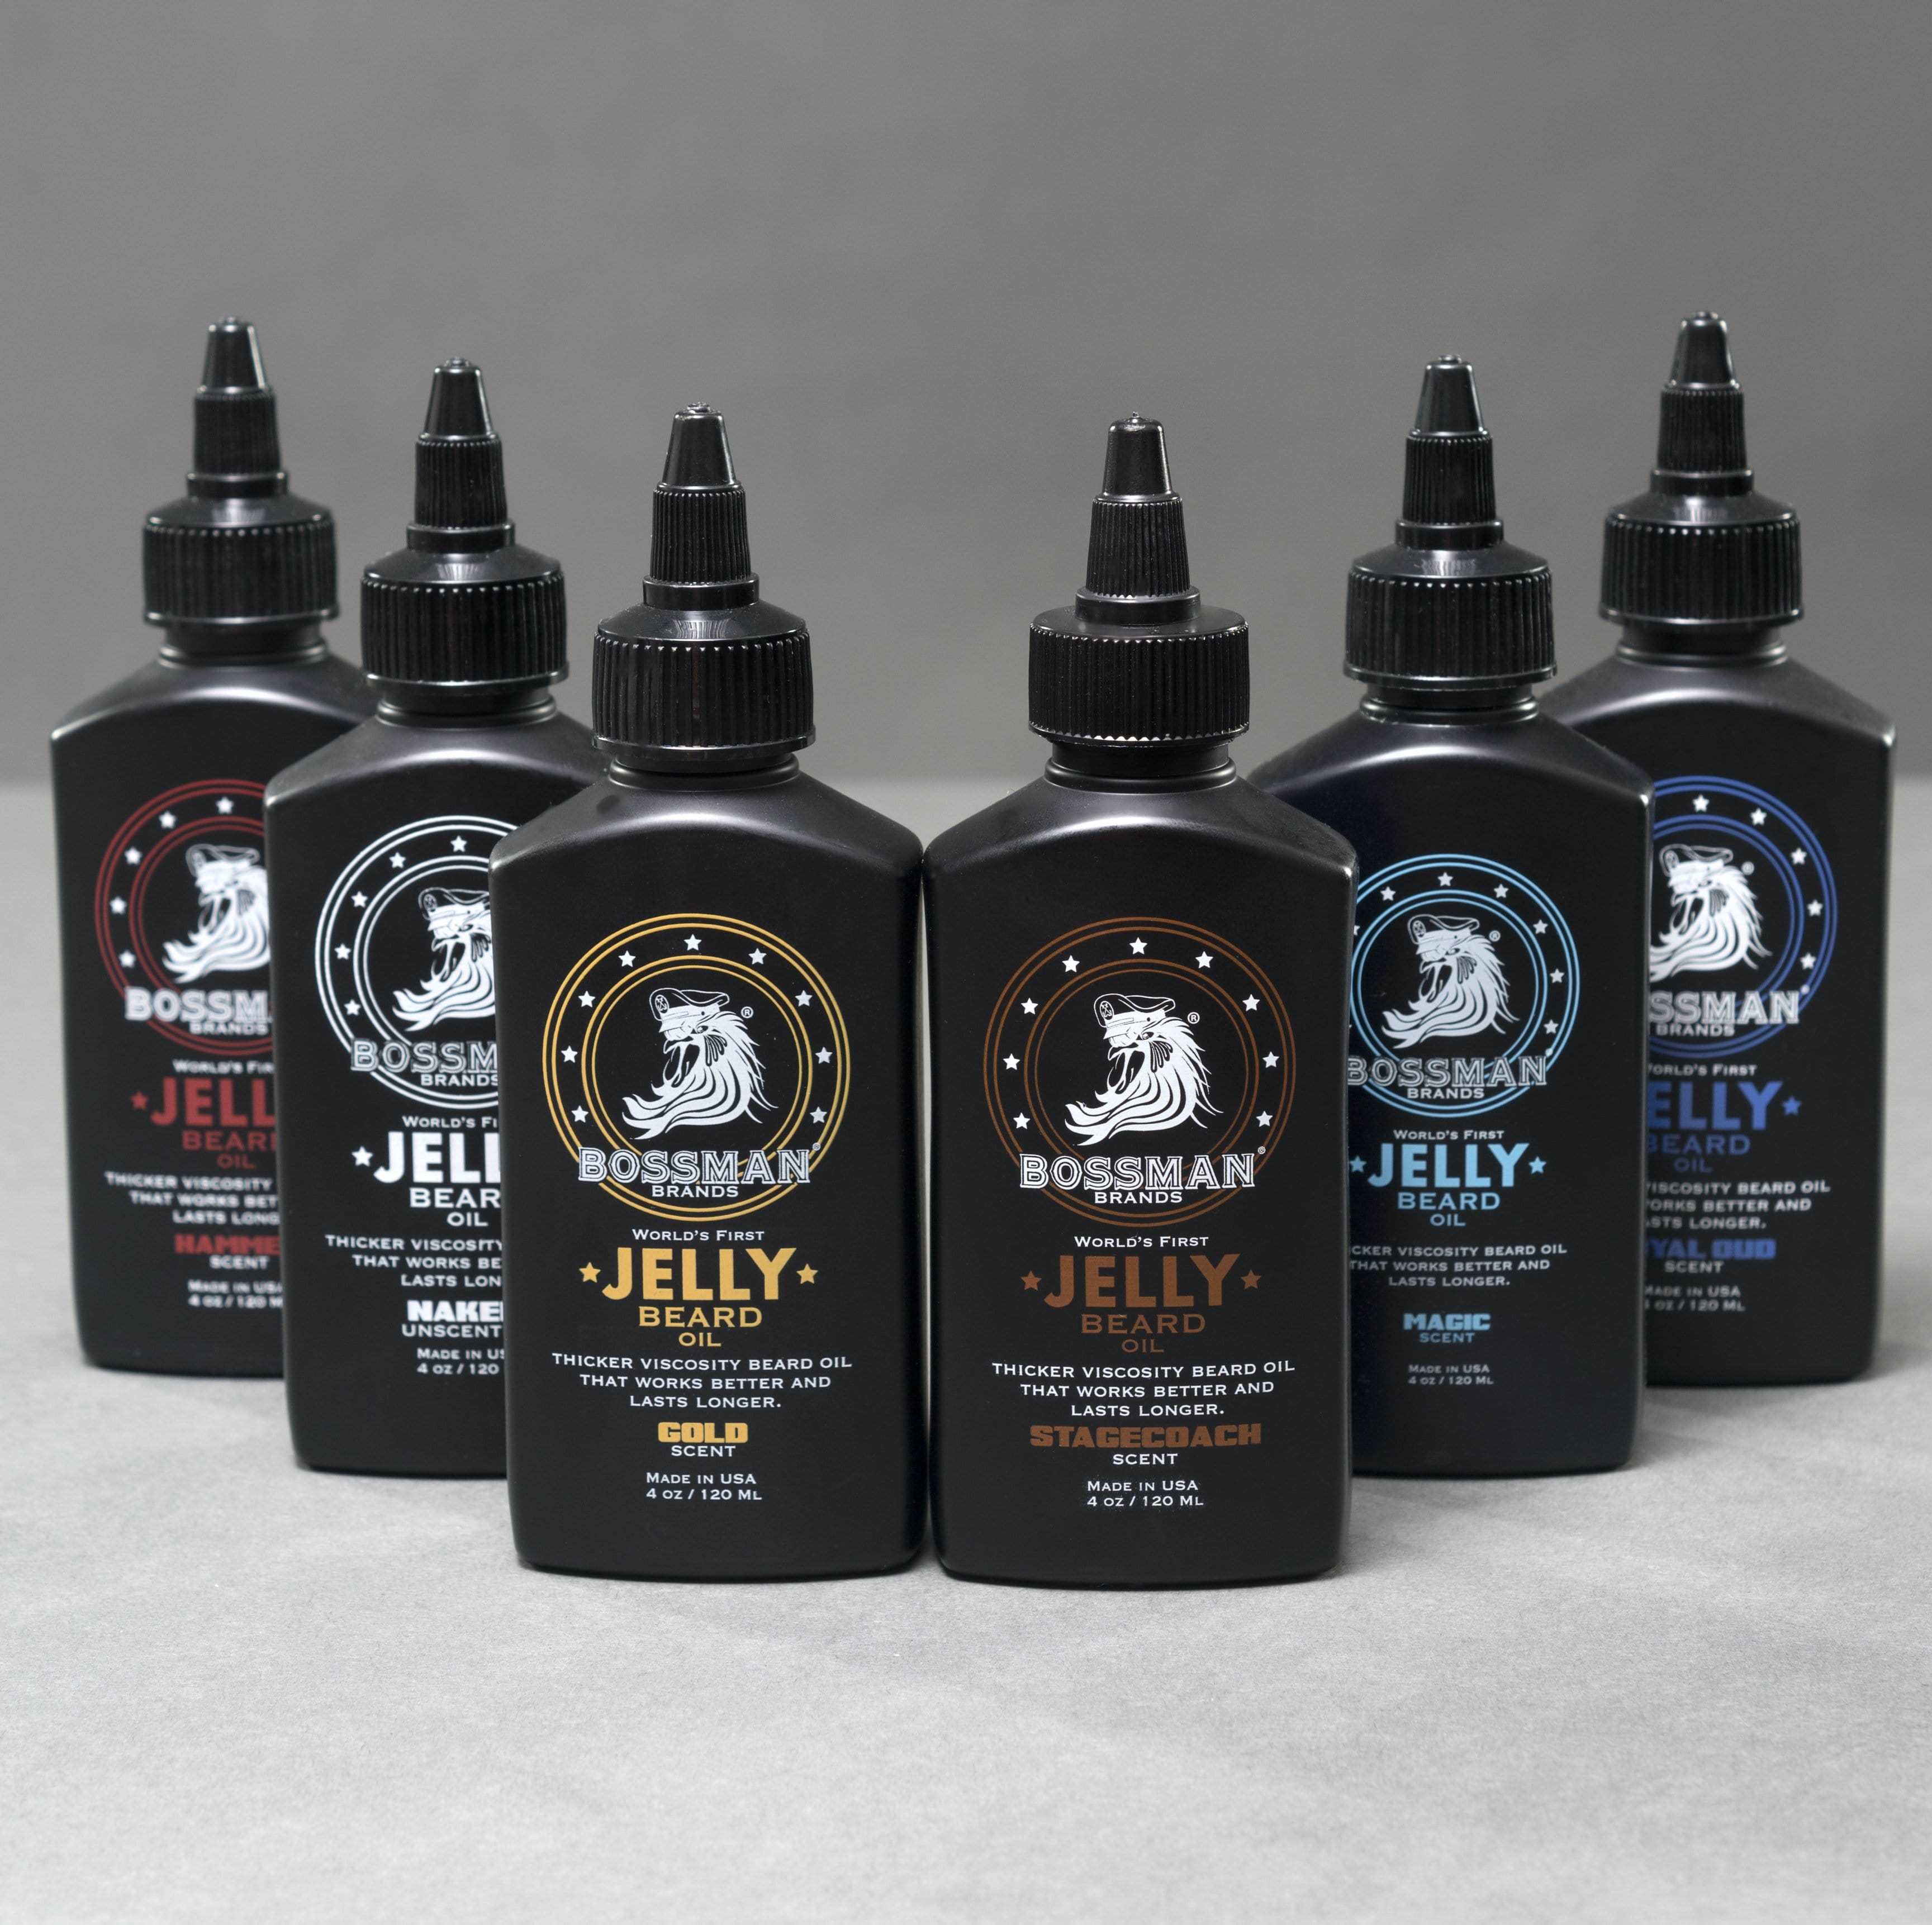 Jelly Beard Oil Bossman Brands